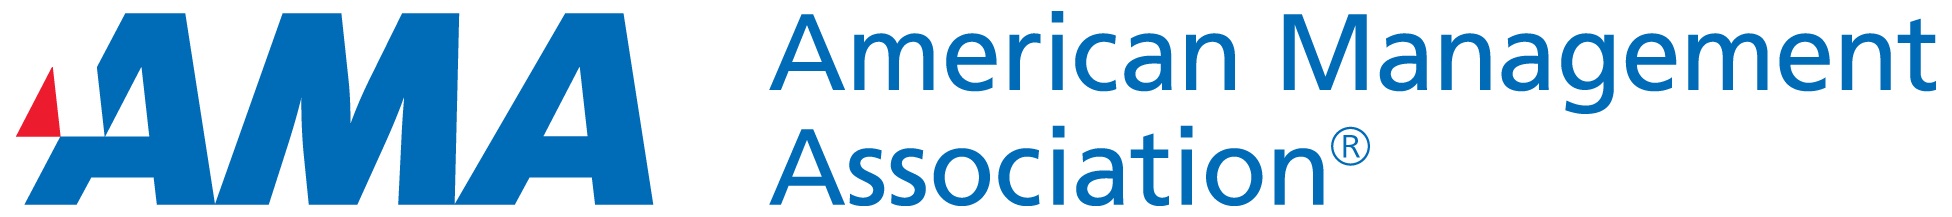 AMA - Corporate Sponsor